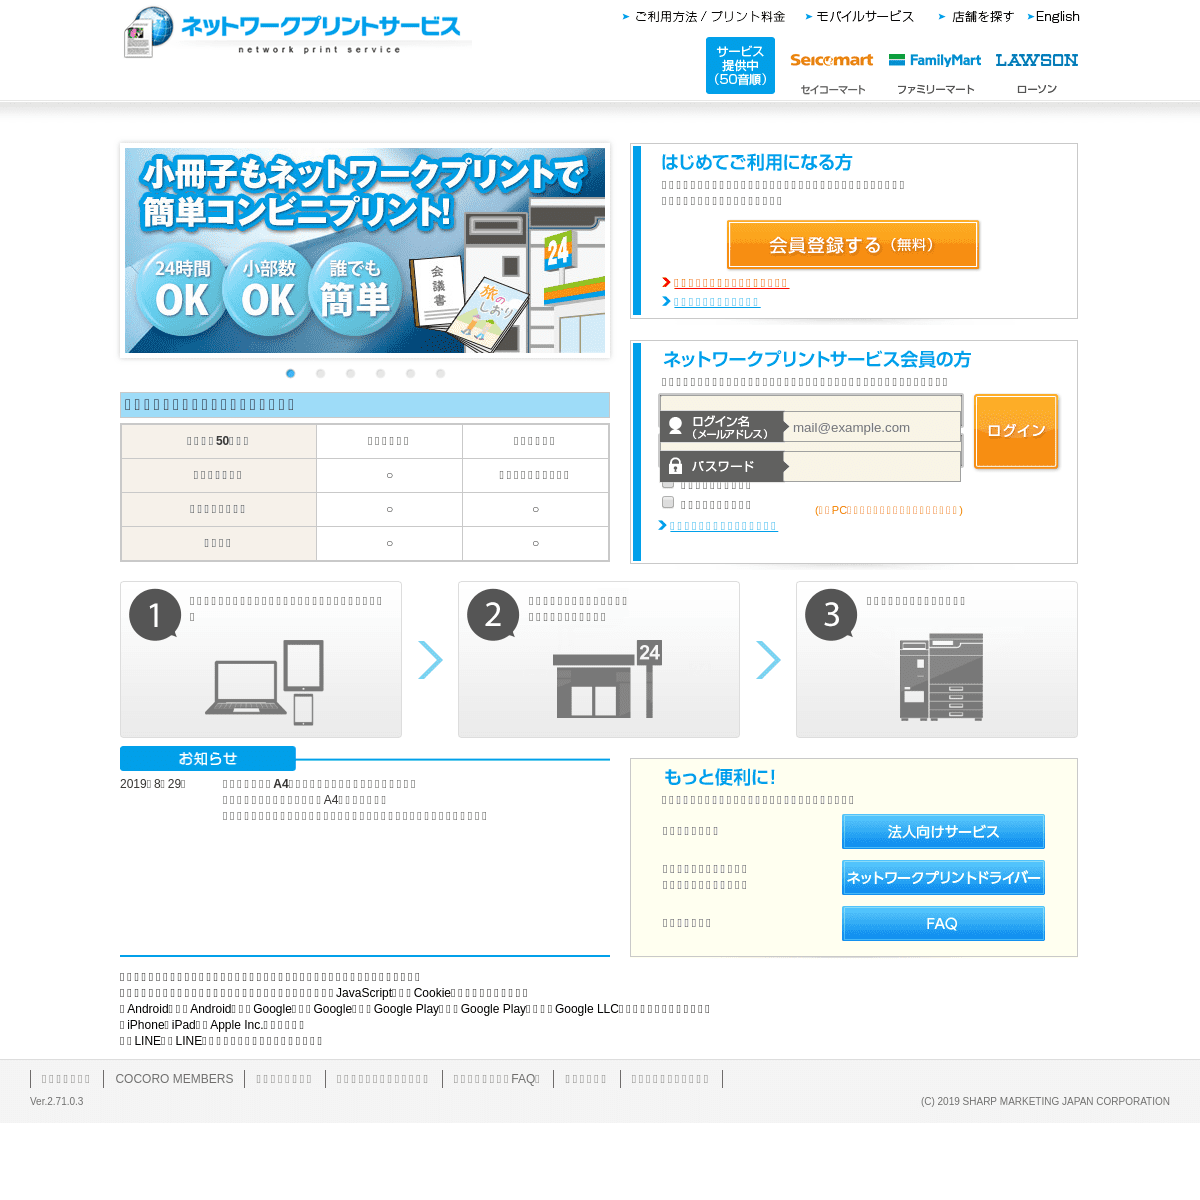 A complete backup of networkprint.ne.jp